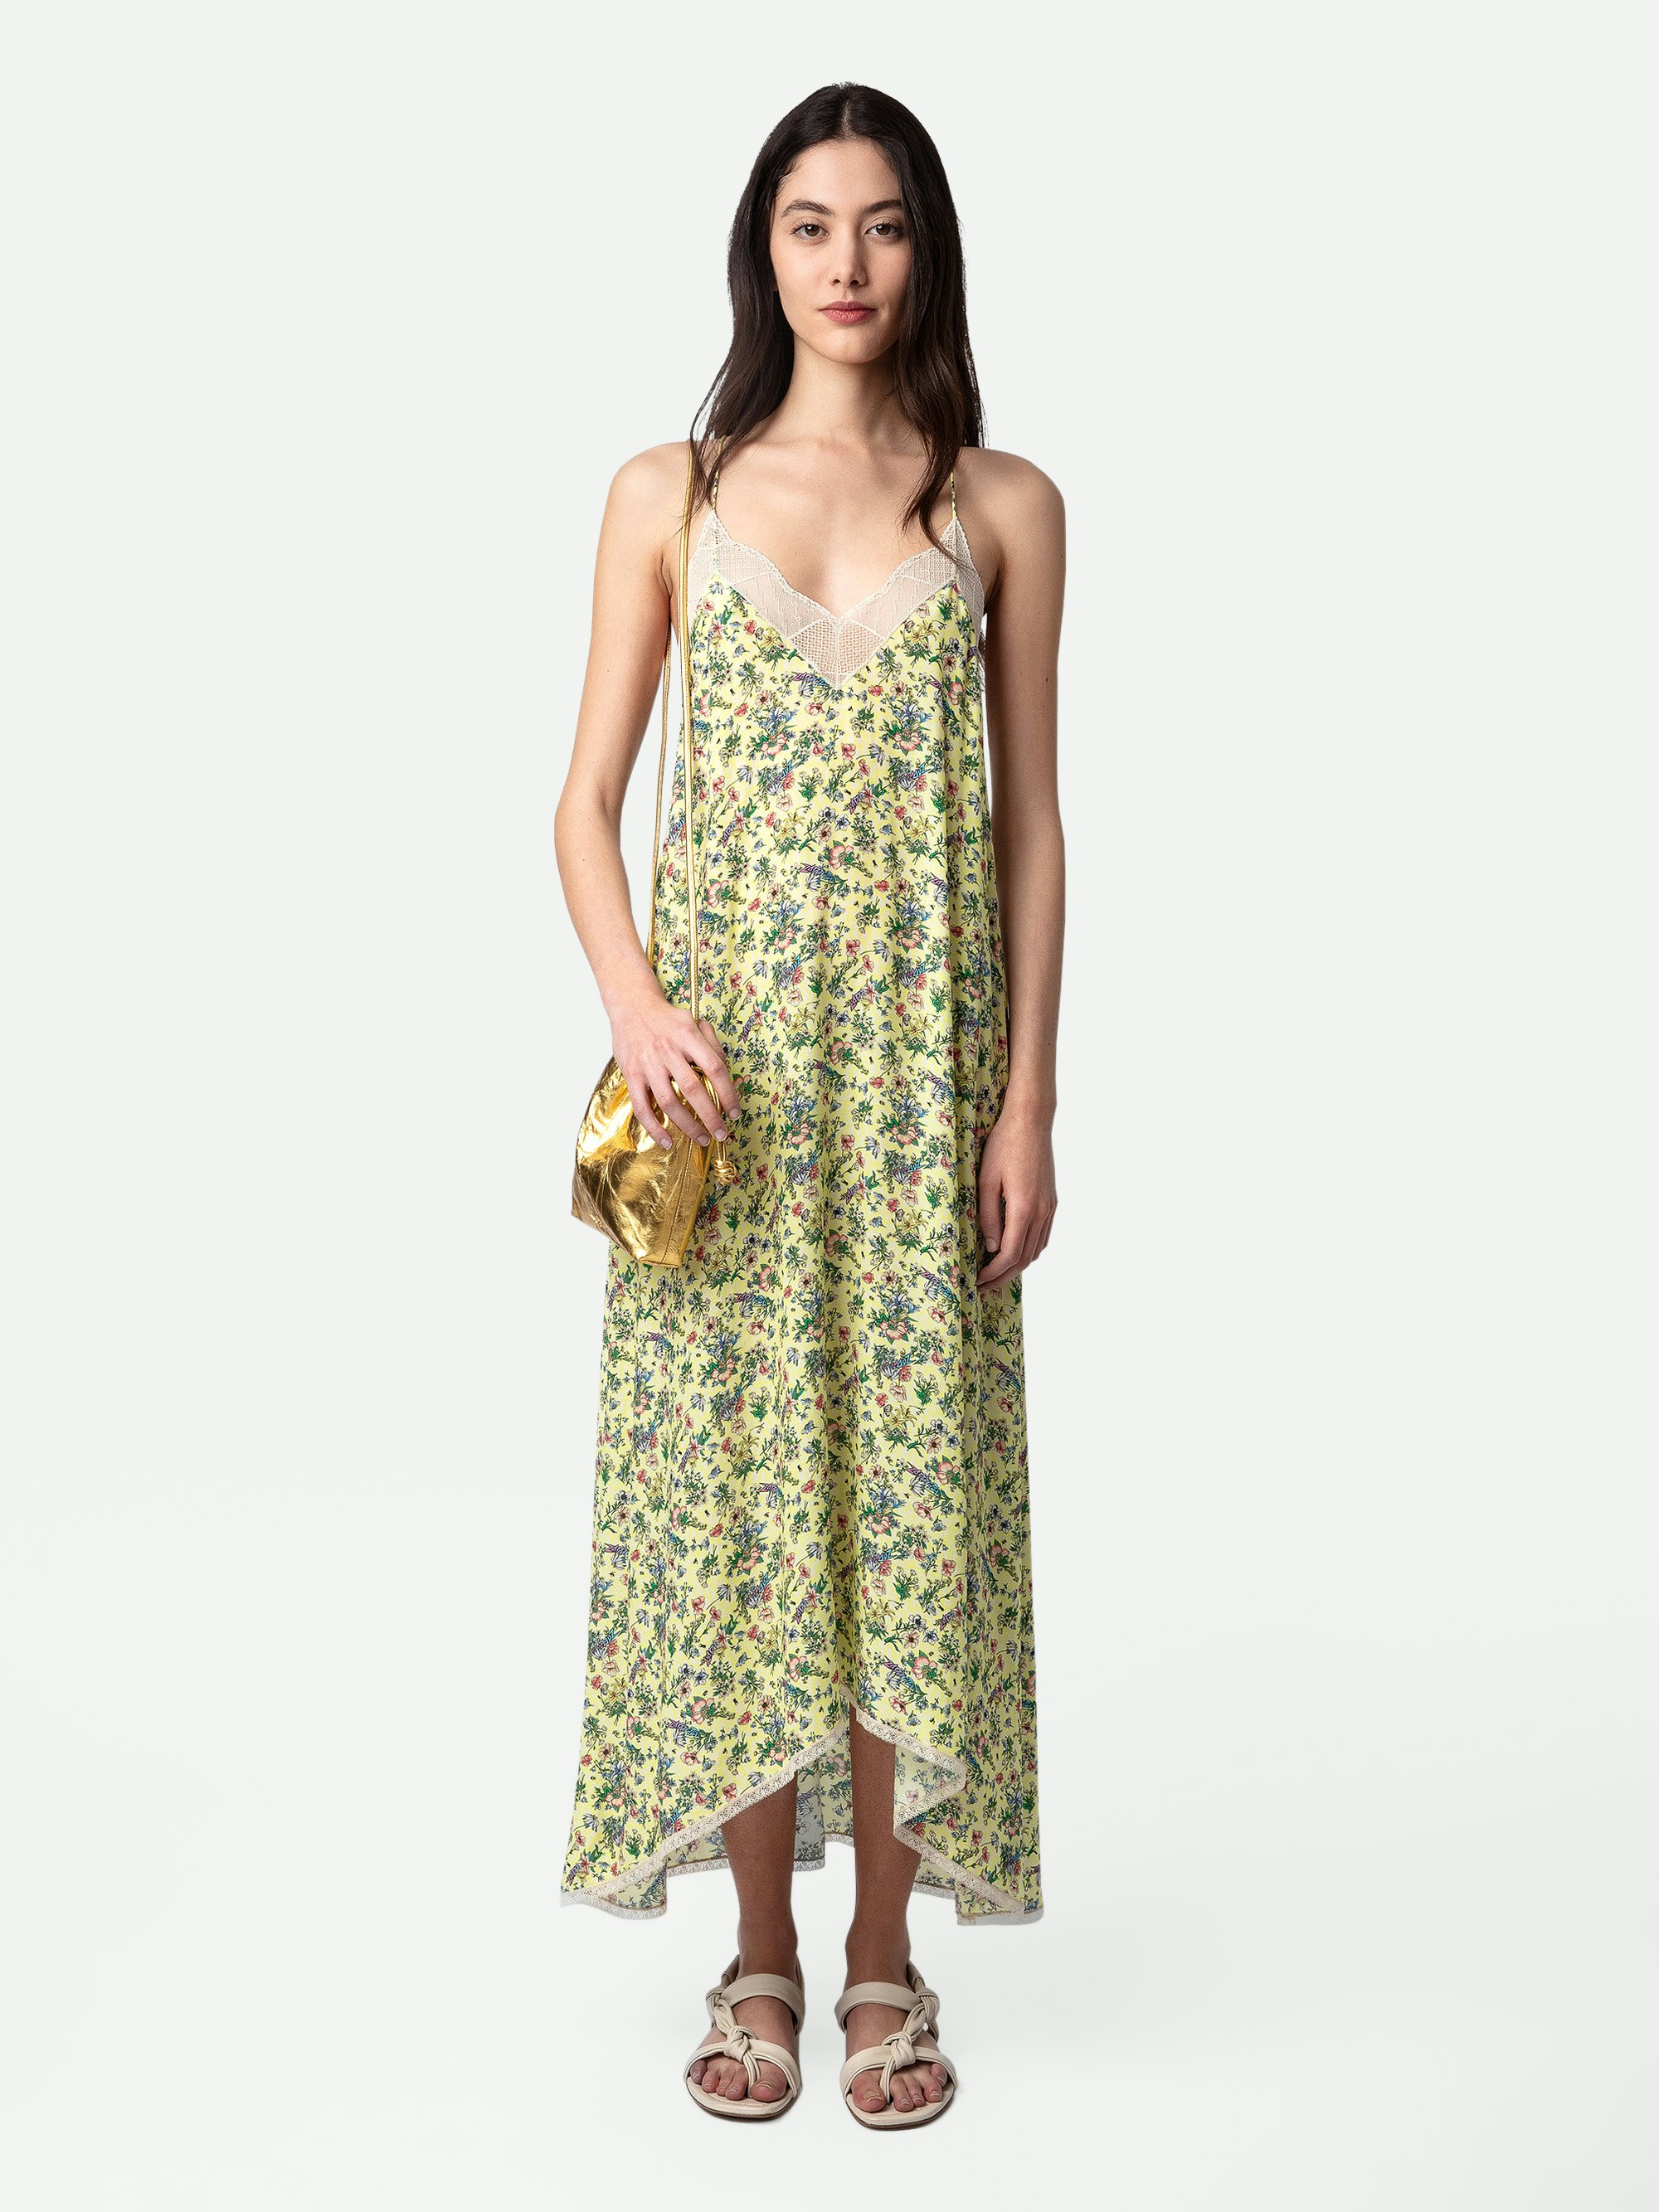 Risty Dress - Women’s long yellow floral-print silk dress.